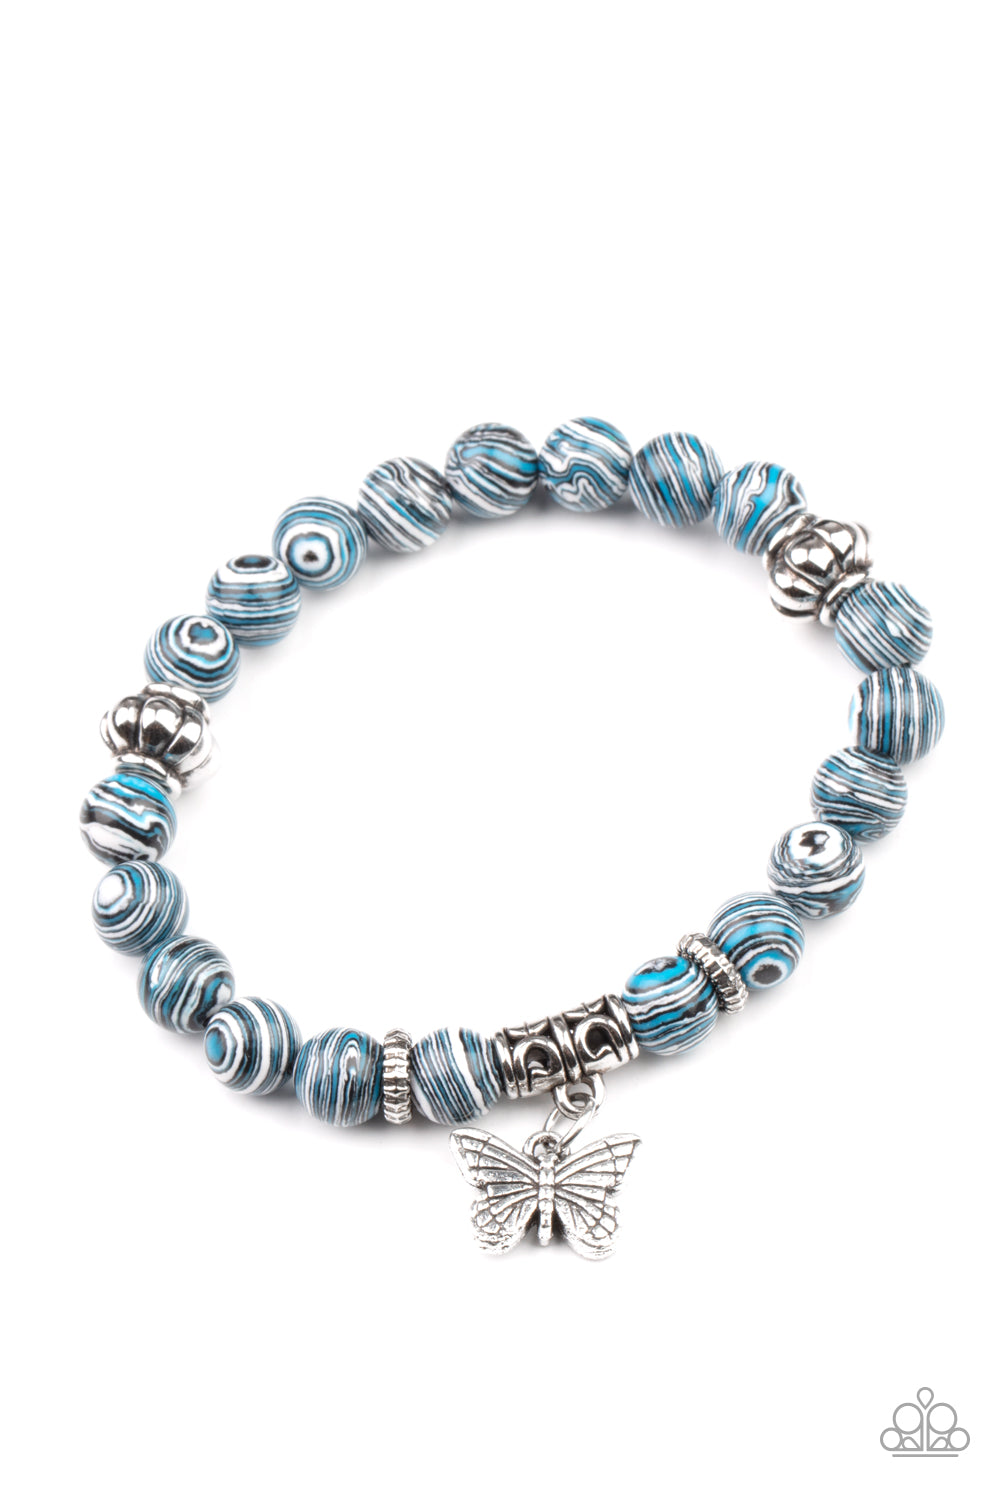 Butterfly Wishes - Blue - Paparazzi - Dtye Embellishing Boutique